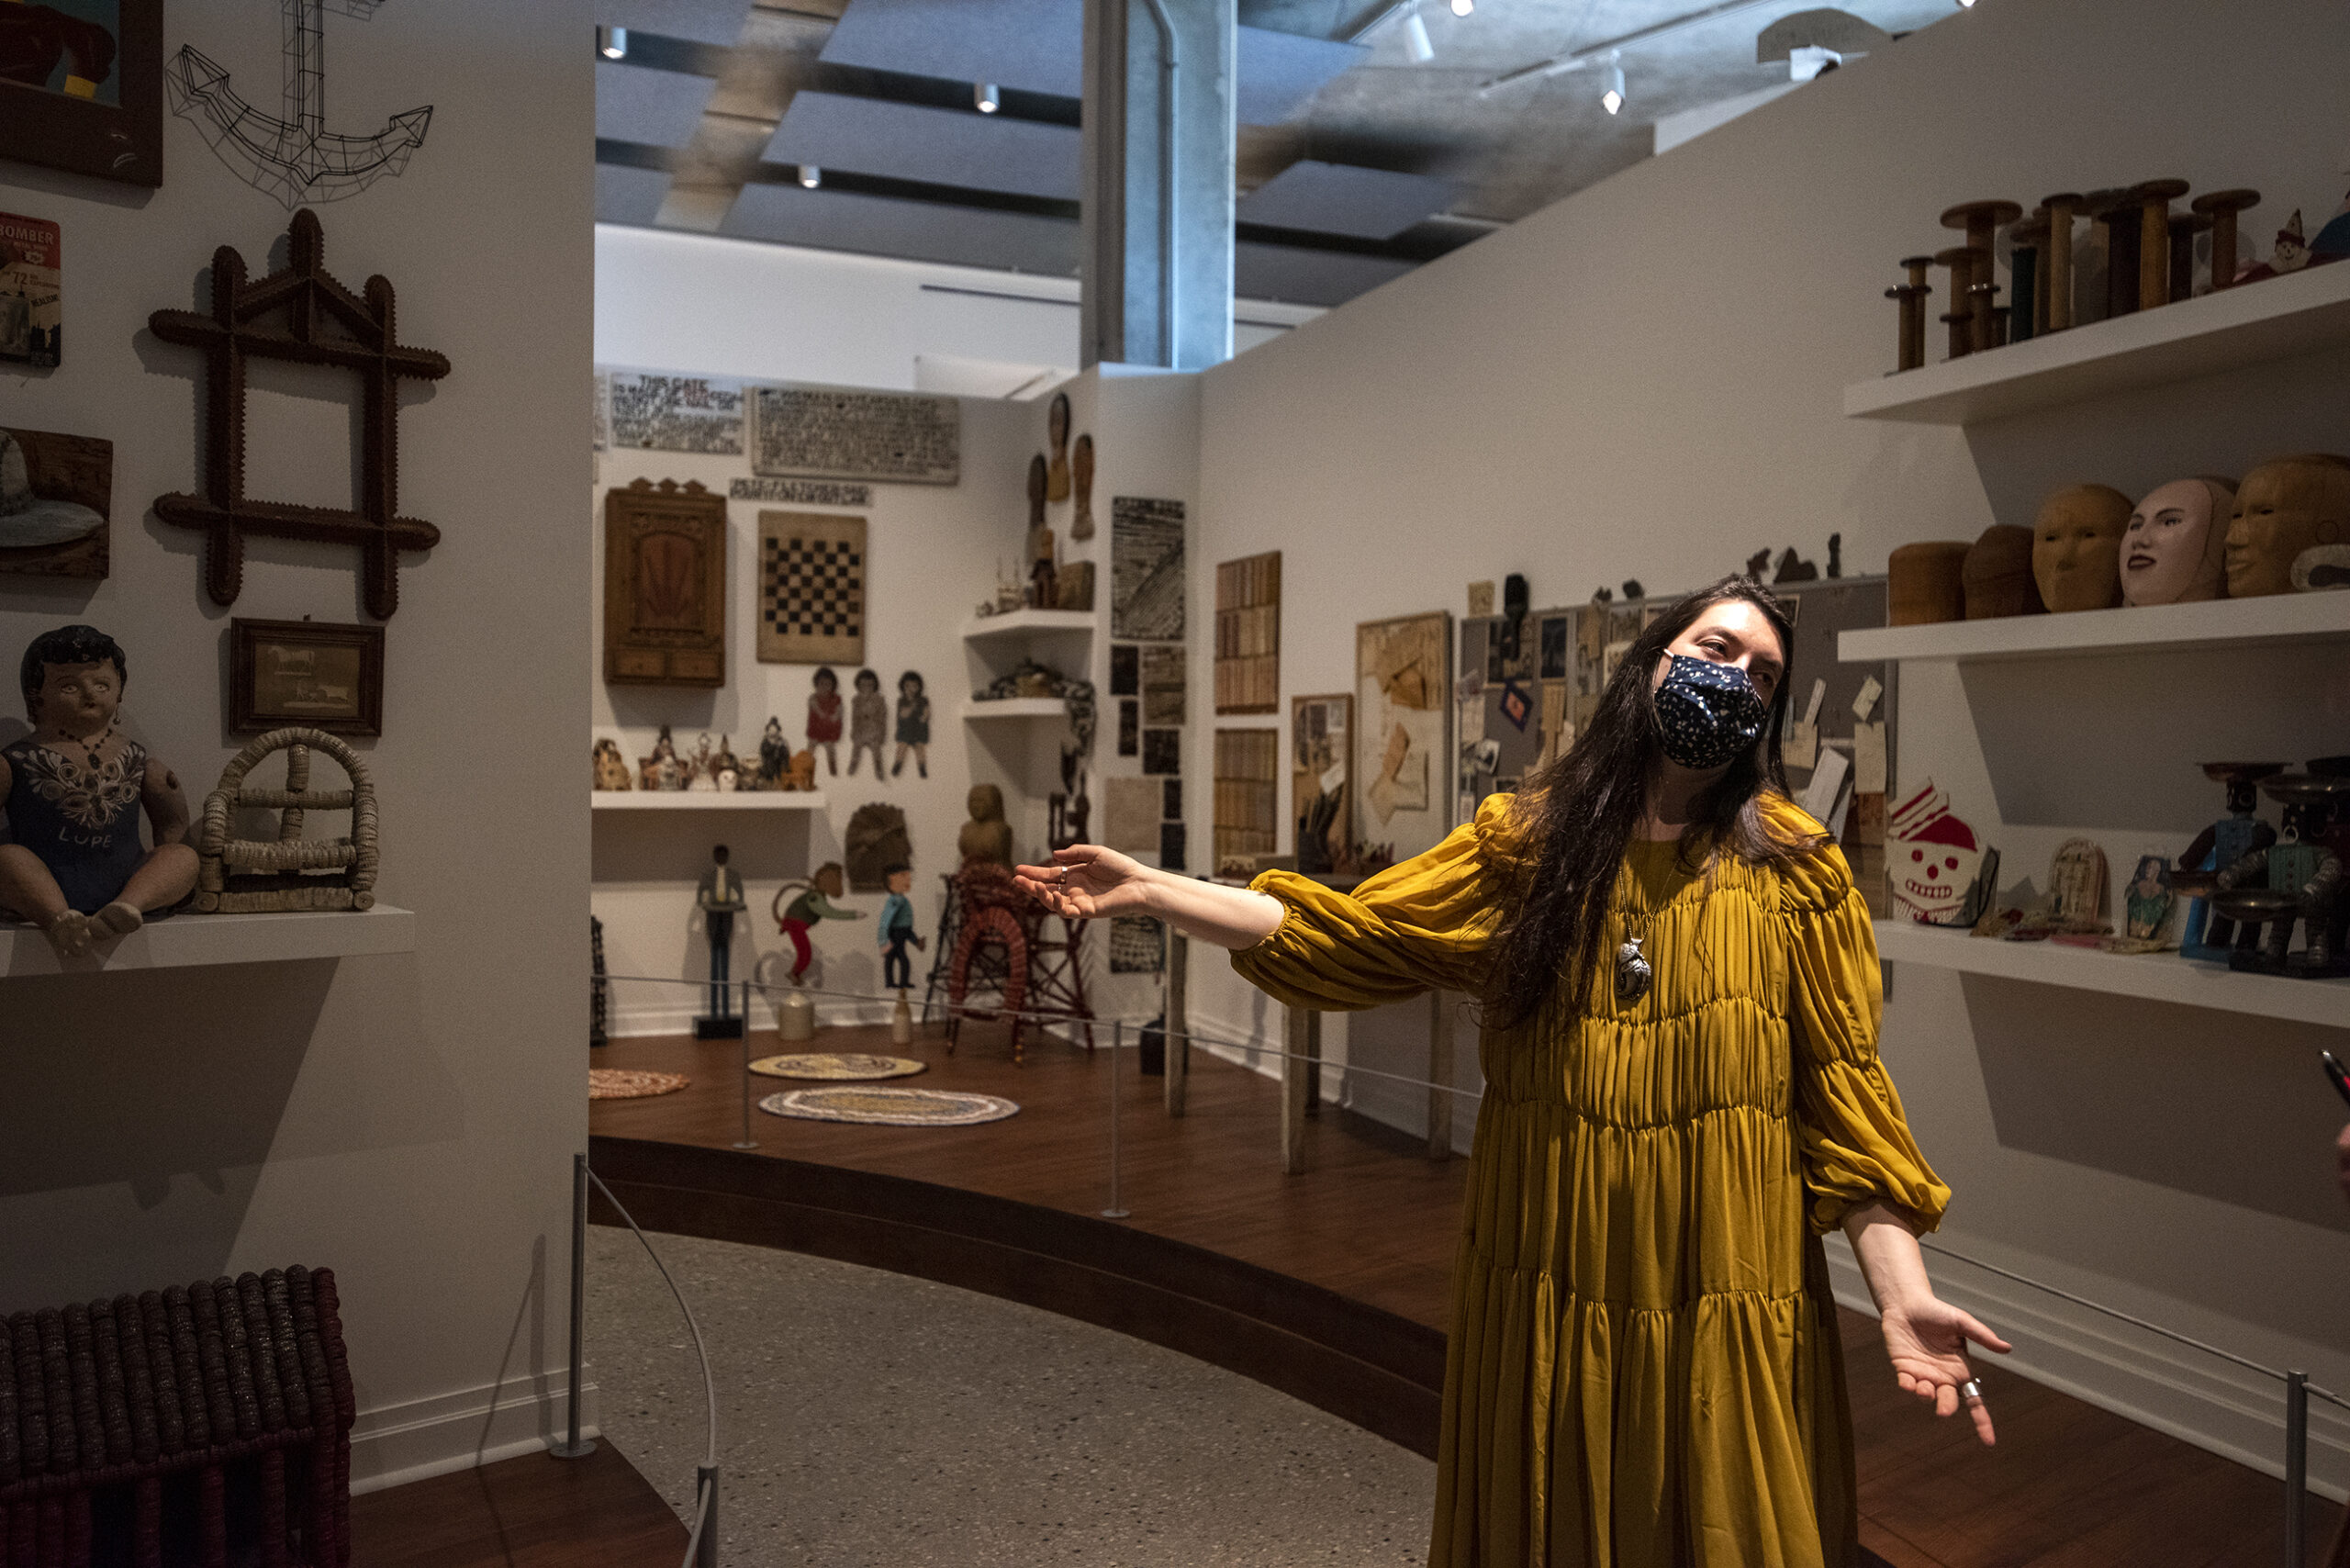 A woman gestures as she walks through an art display.